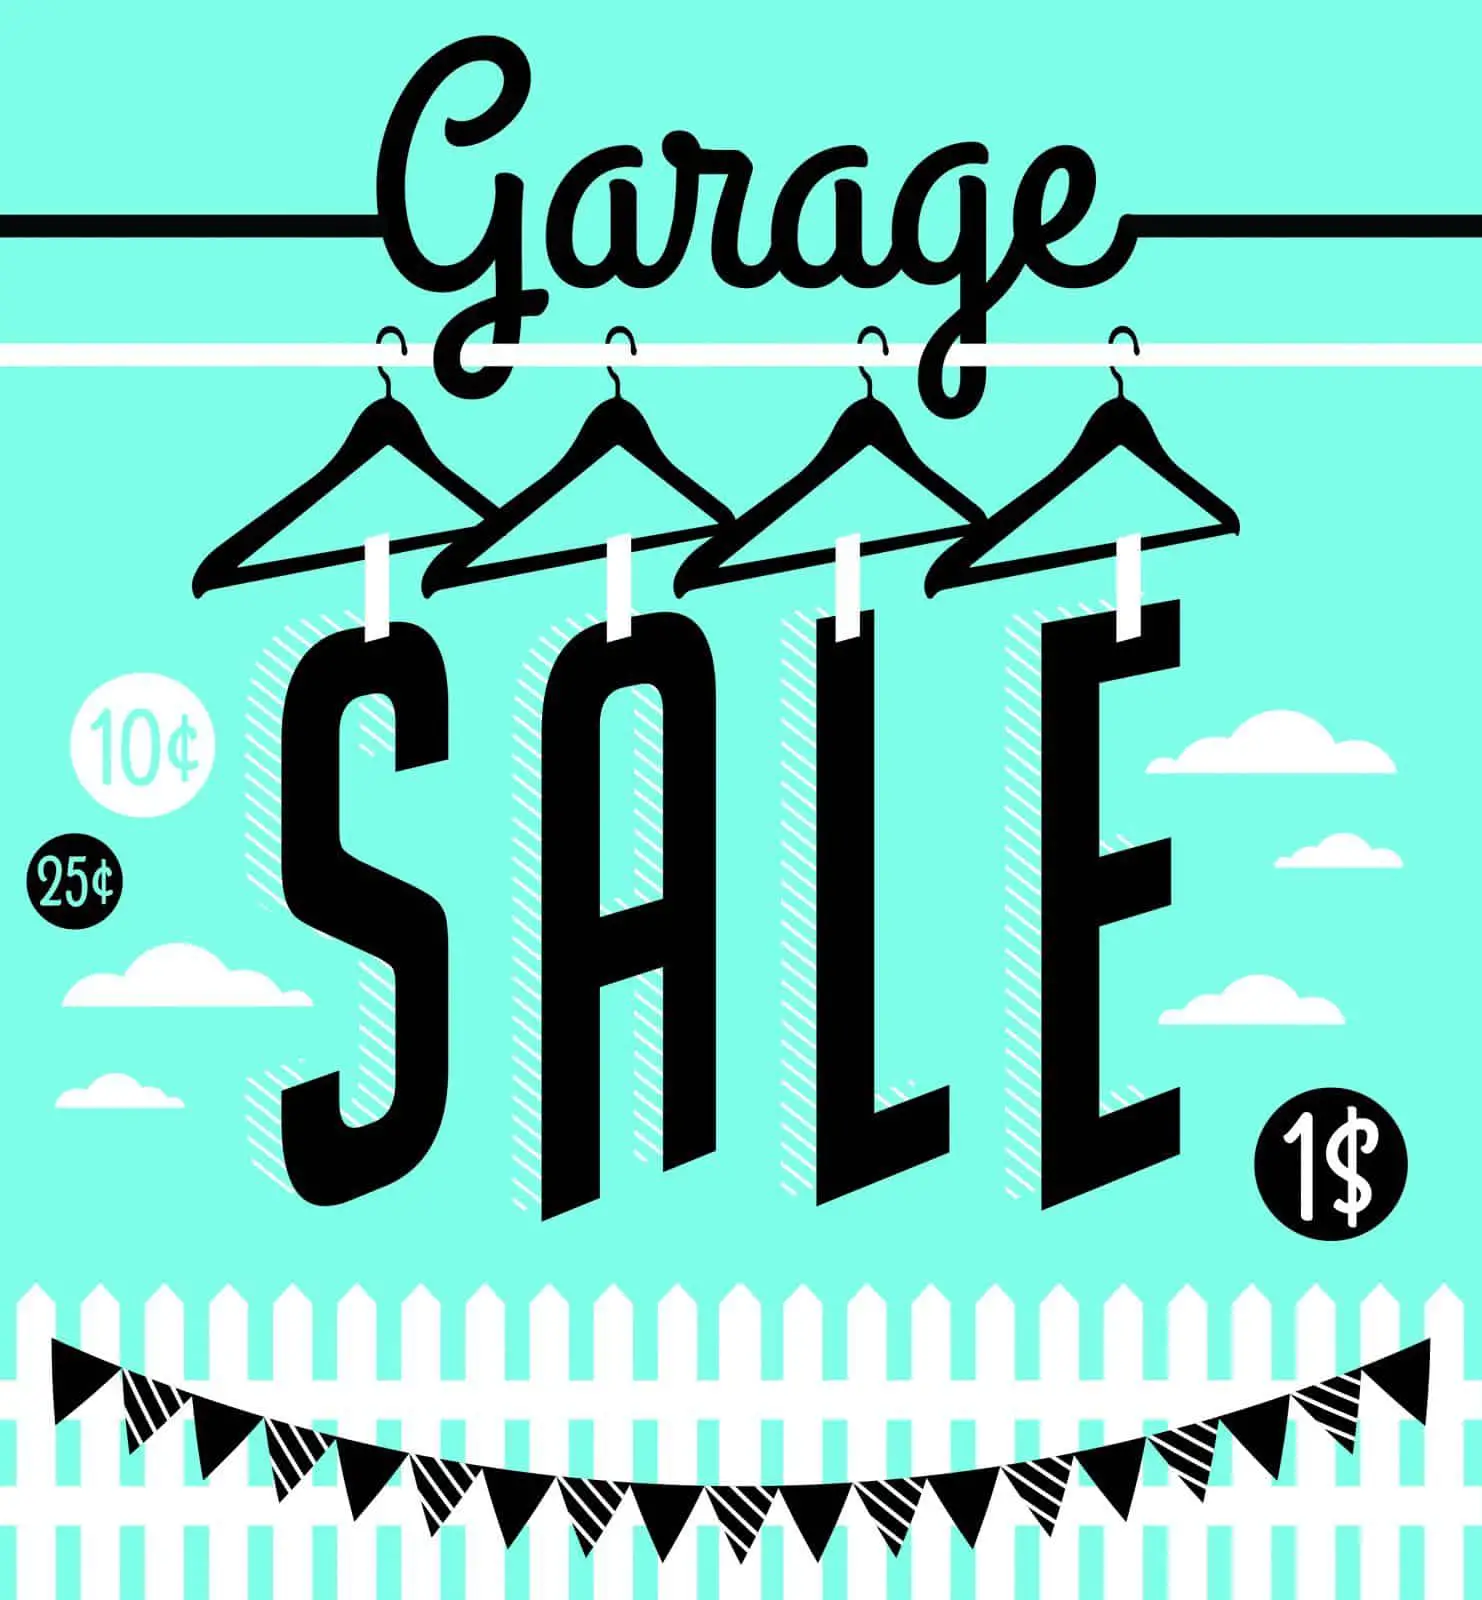 Garage sales in my area